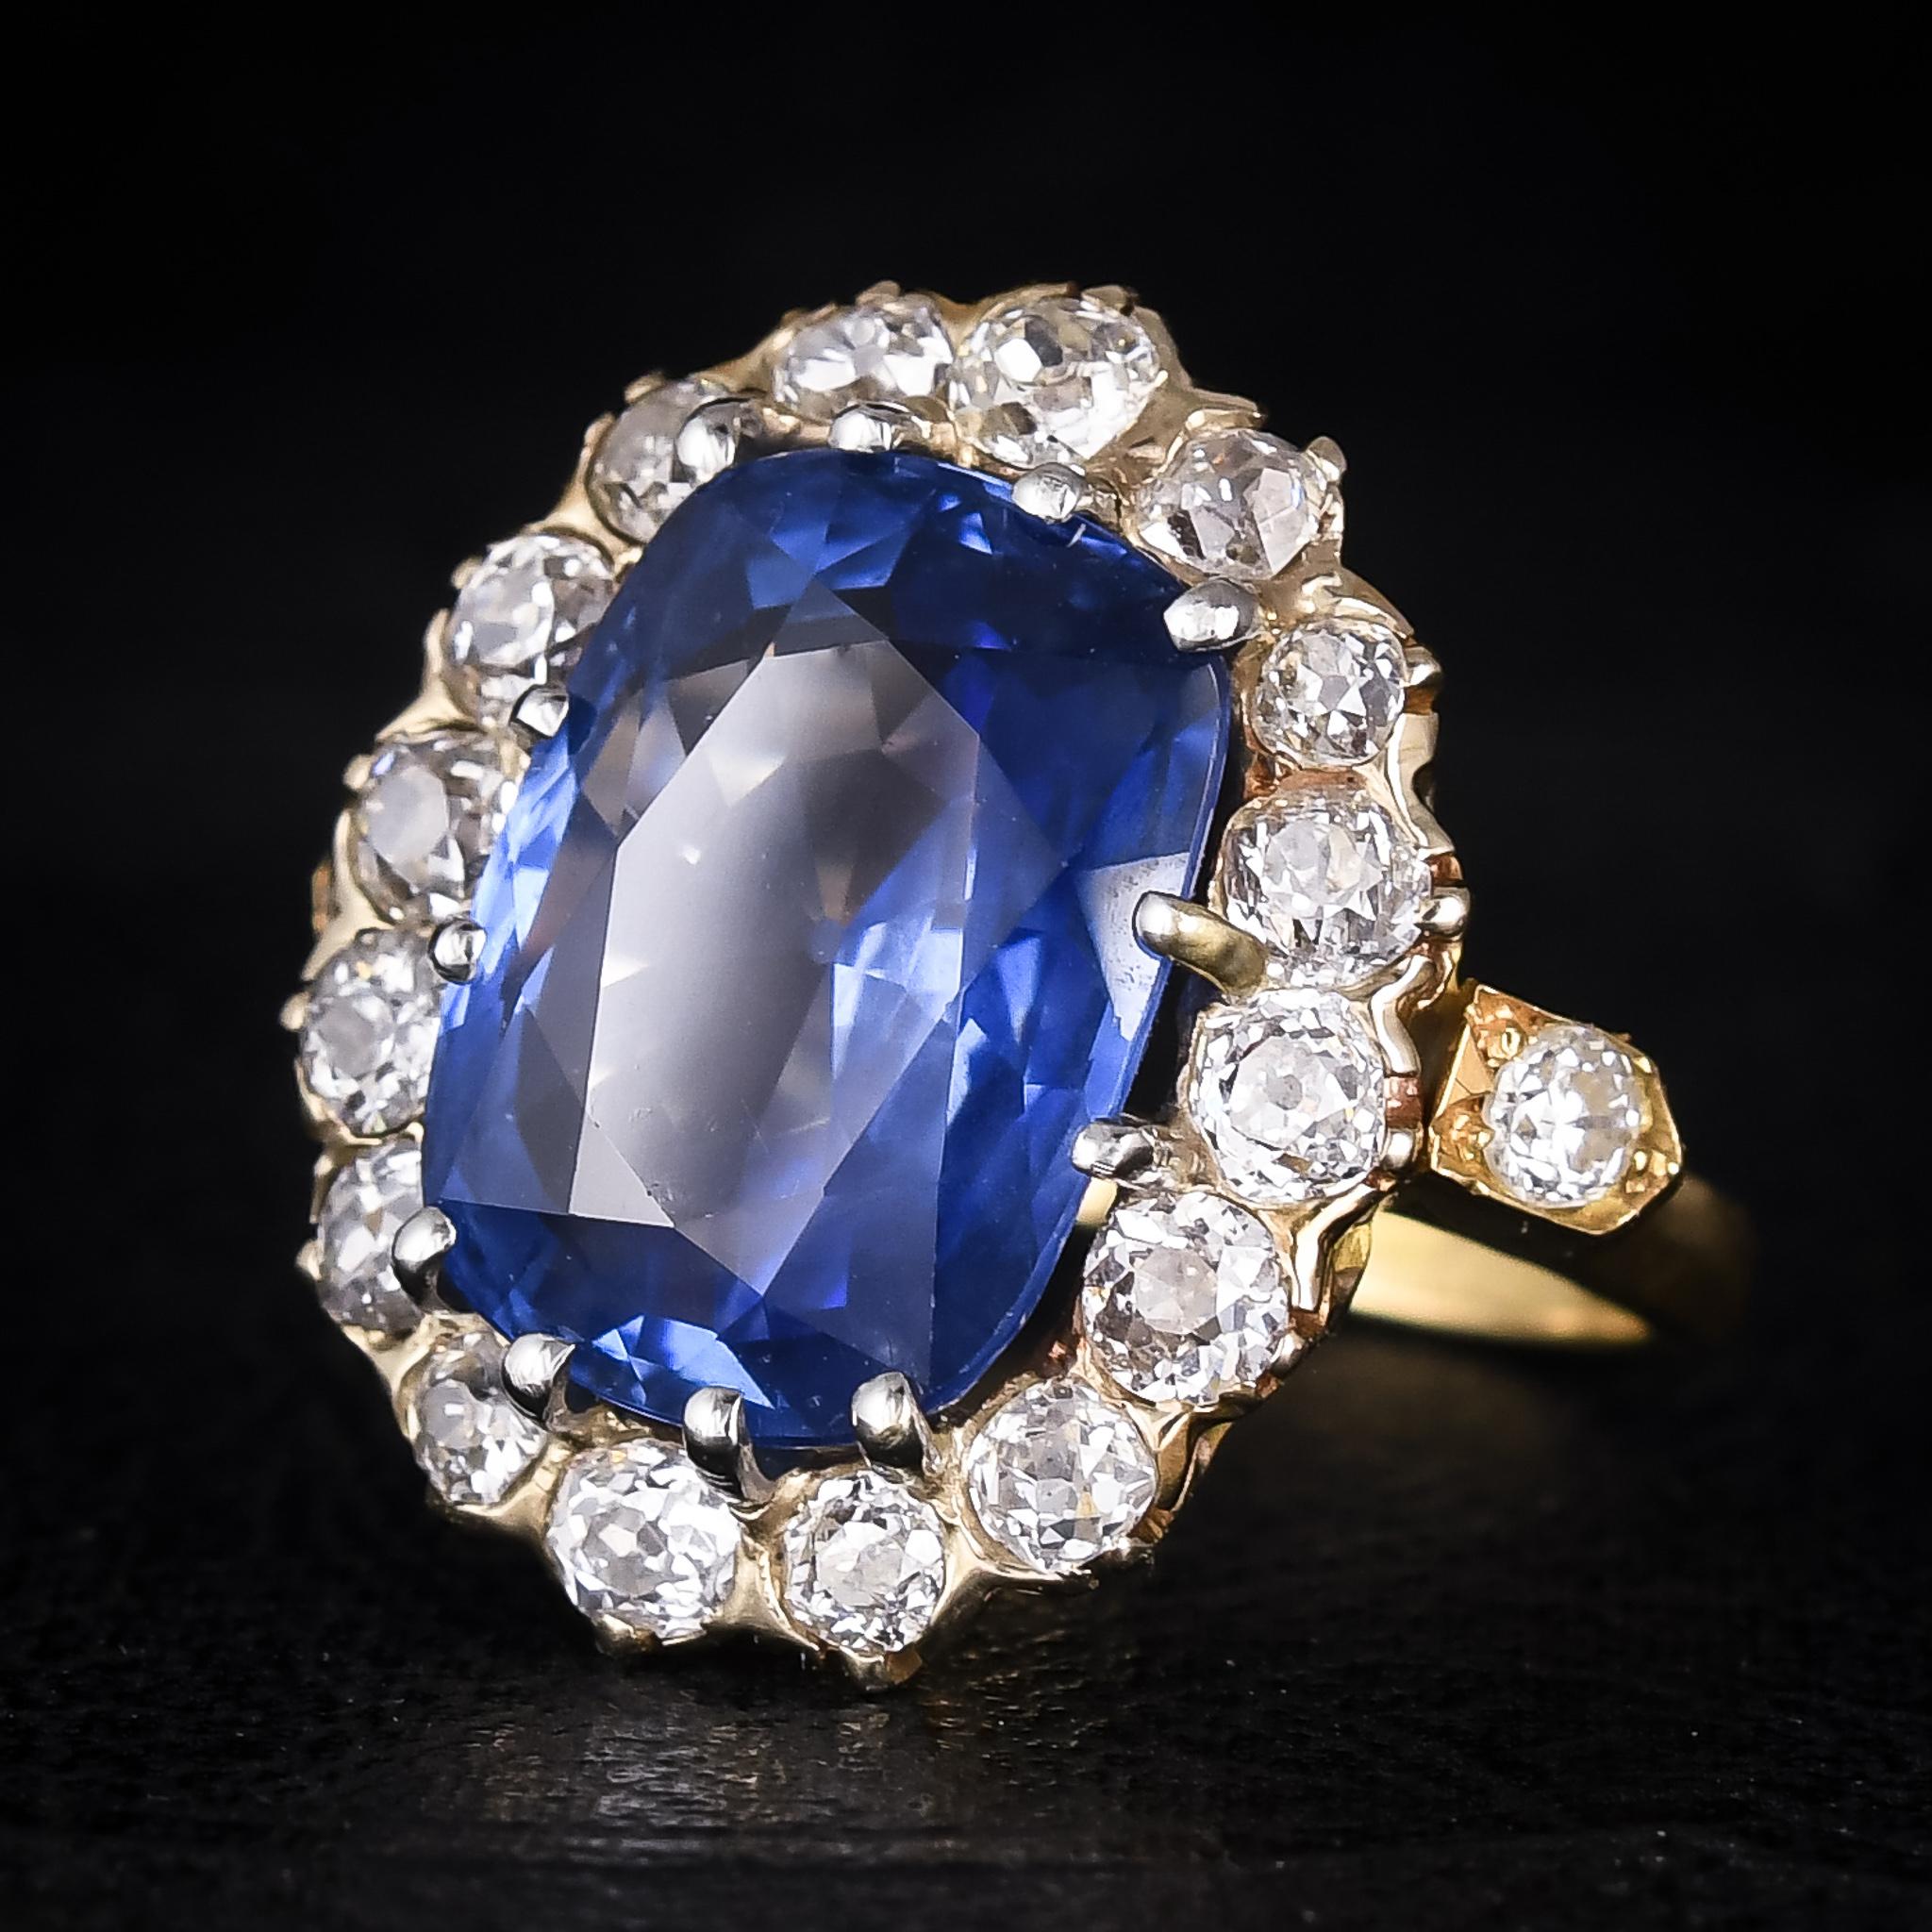 Late Victorian Antique Victorian 13.5 Carat Burma Sapphire Diamond Cluster Ring For Sale